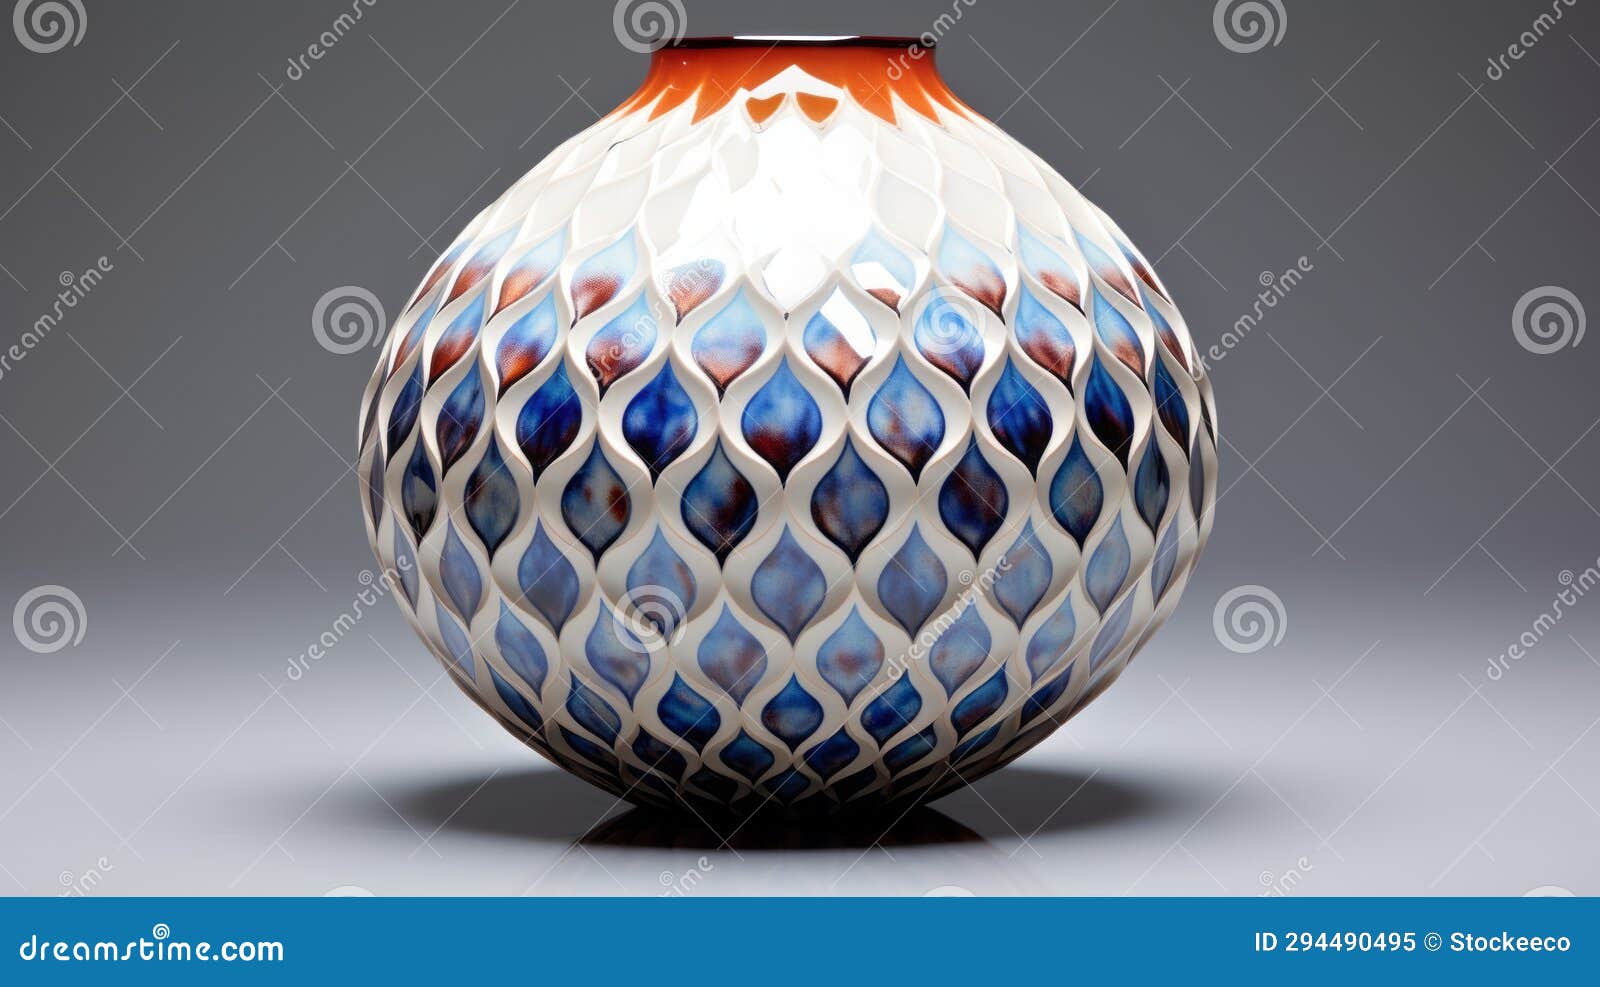 tebeo blue orange vase - stuart haygarth style - nathan wirth